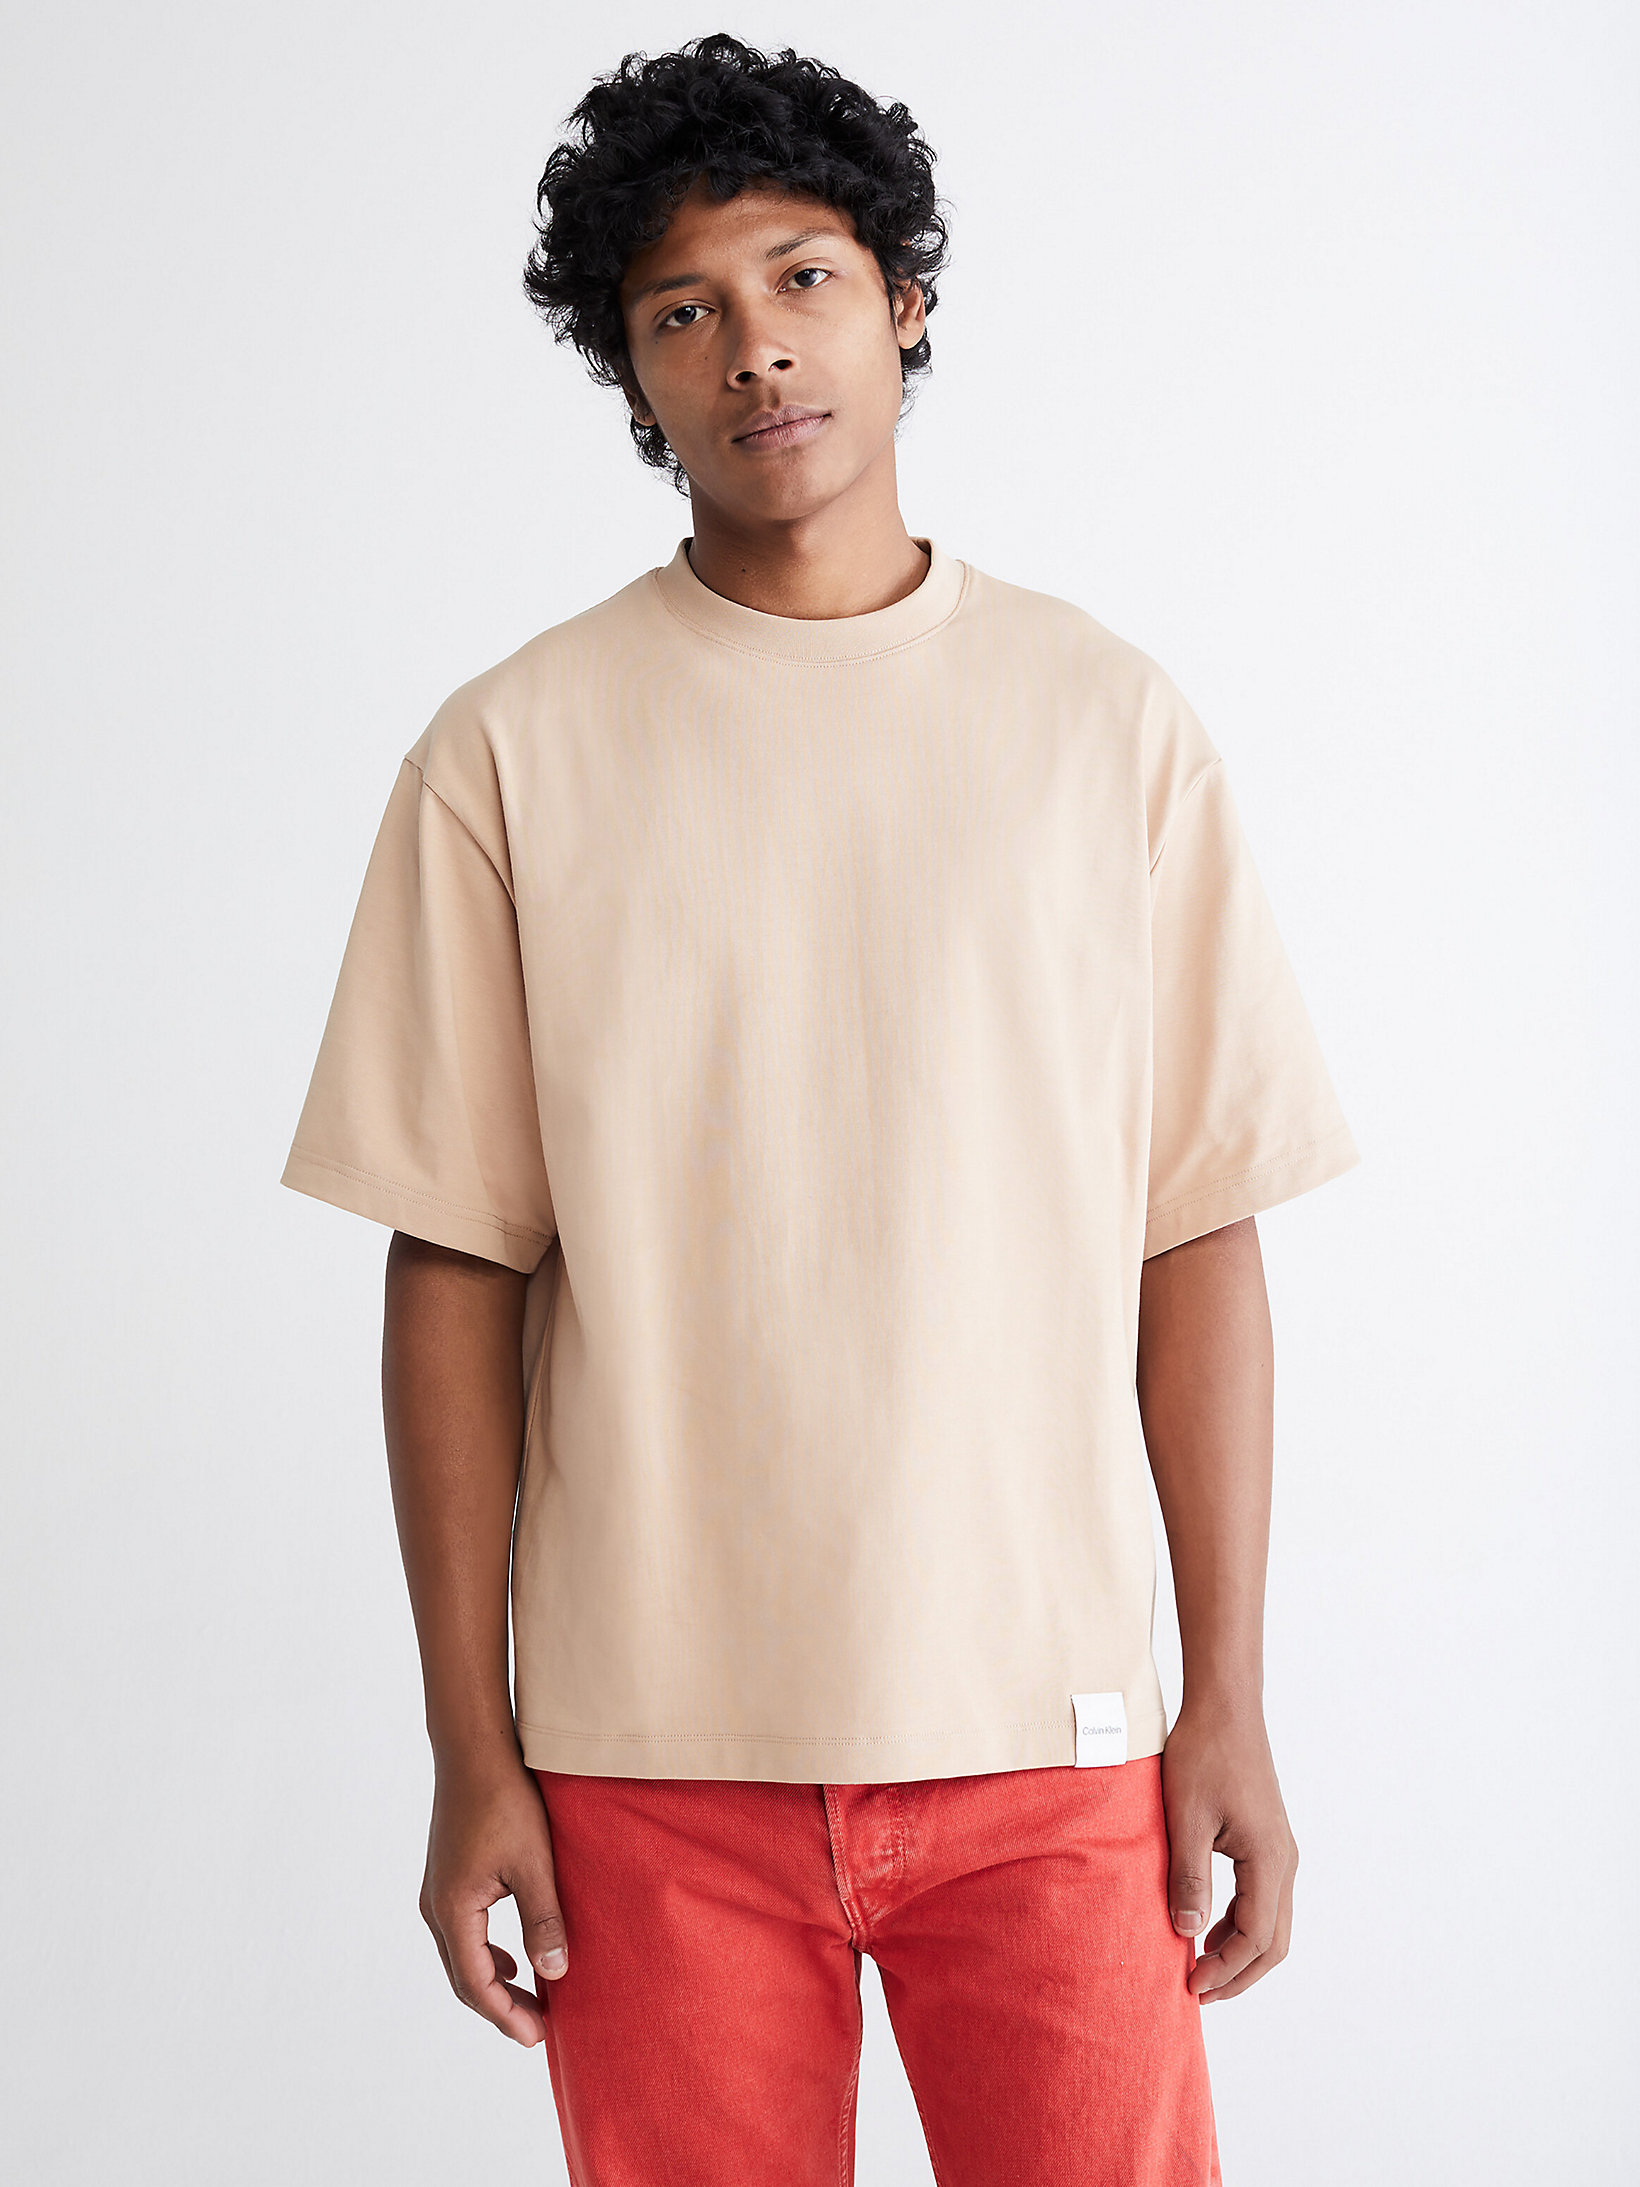 Sandrift Unisex Relaxed T-Shirt - CK Standards undefined unisex Calvin Klein